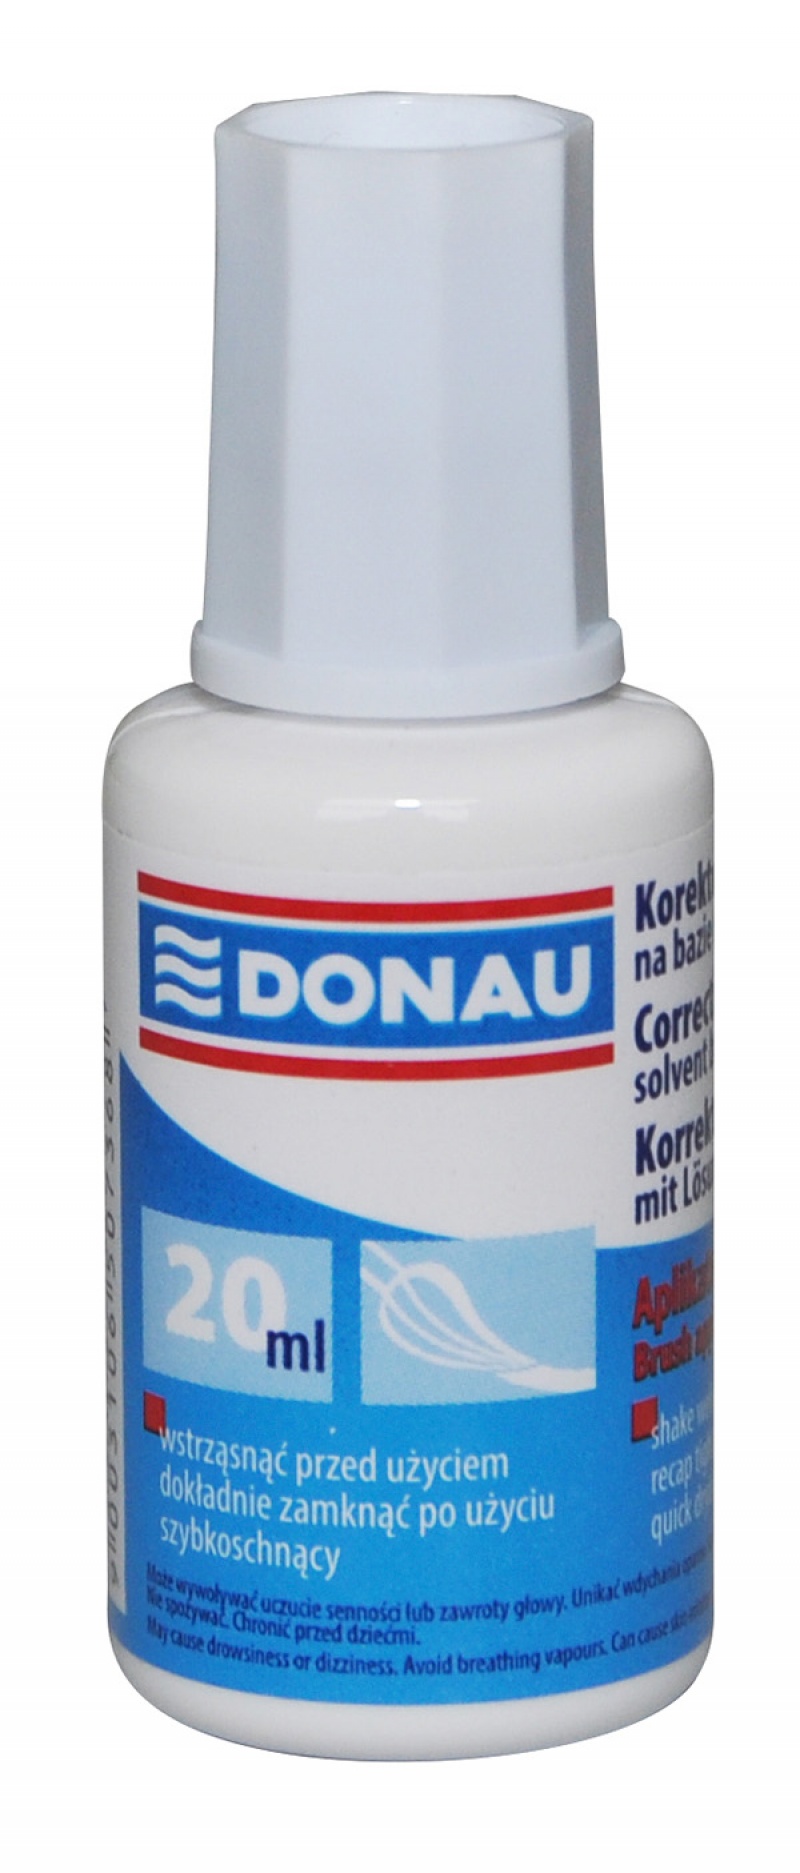 Correction Liquid DONAU, brush applicator, 20ml